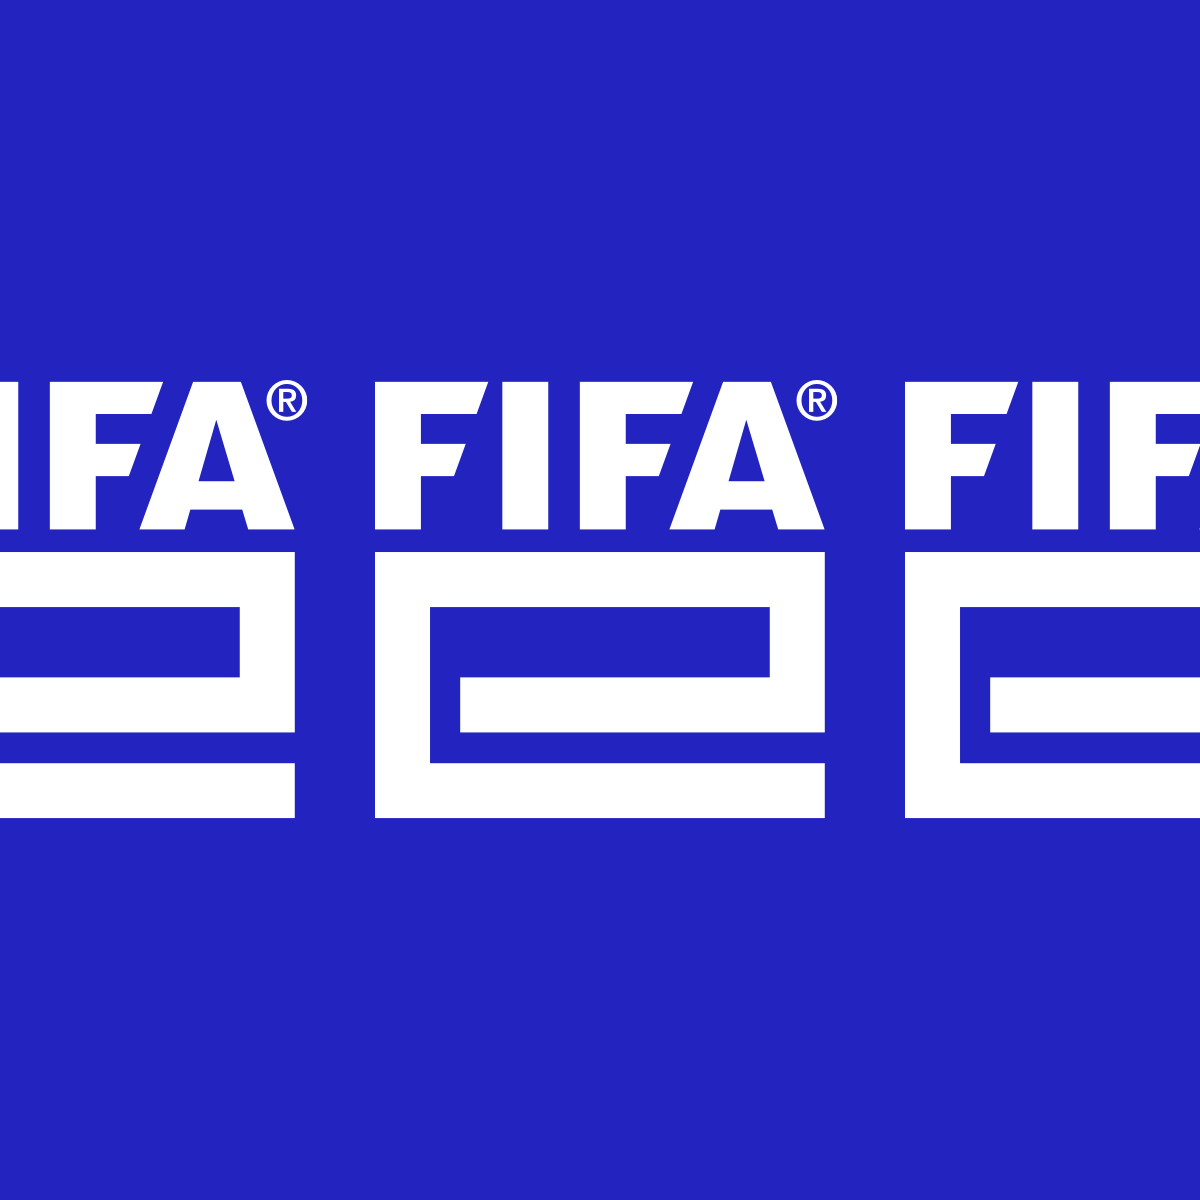 CONTA FIFA 23 EA PLAY PC ABSURDA. WEB - FIFA - GGMAX